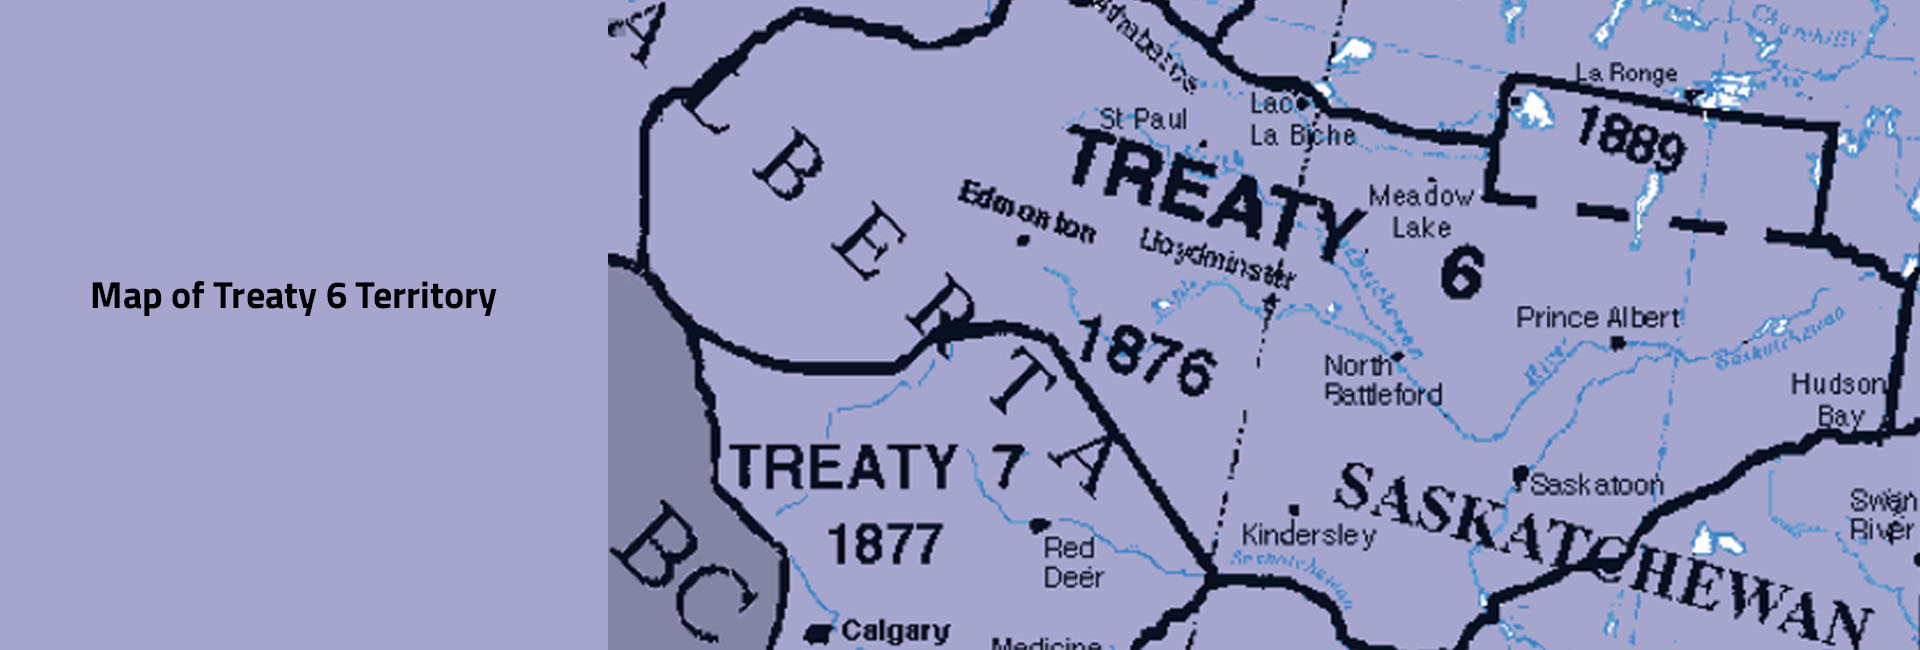 treaty-6-territory.jpg